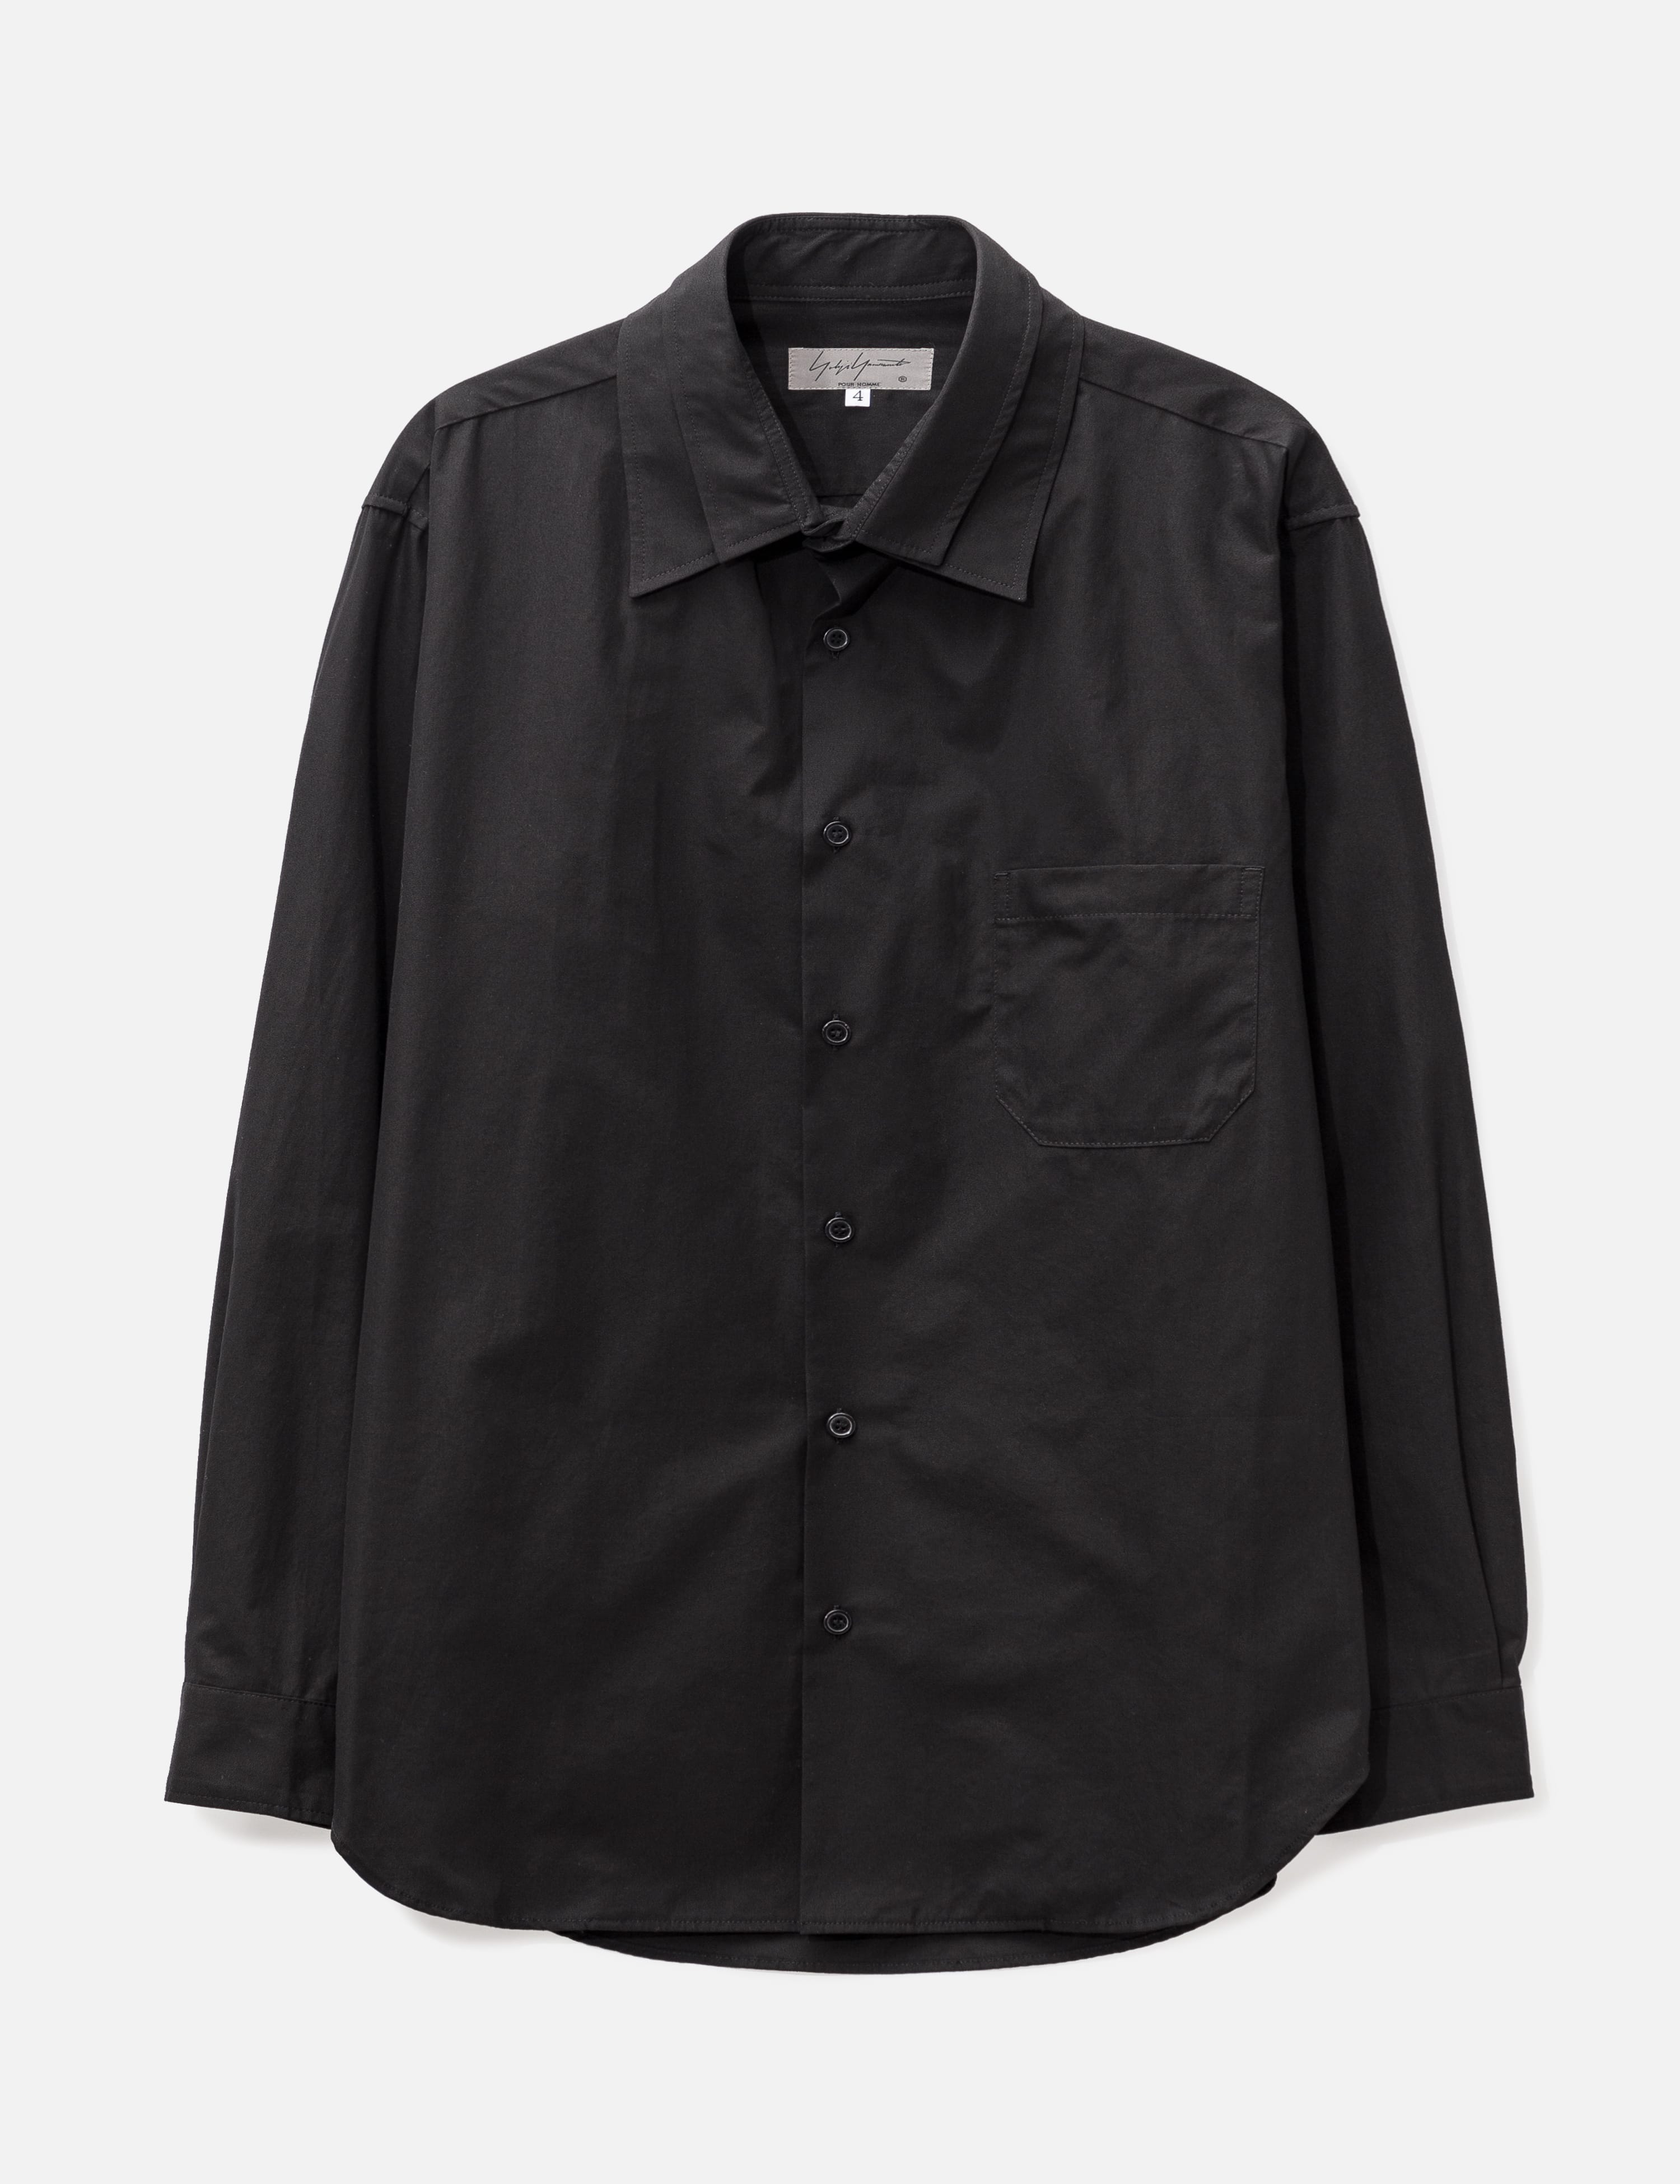 Yohji Yamamoto - Yohji Yamamoto Pour Homme Double Collar Shirt